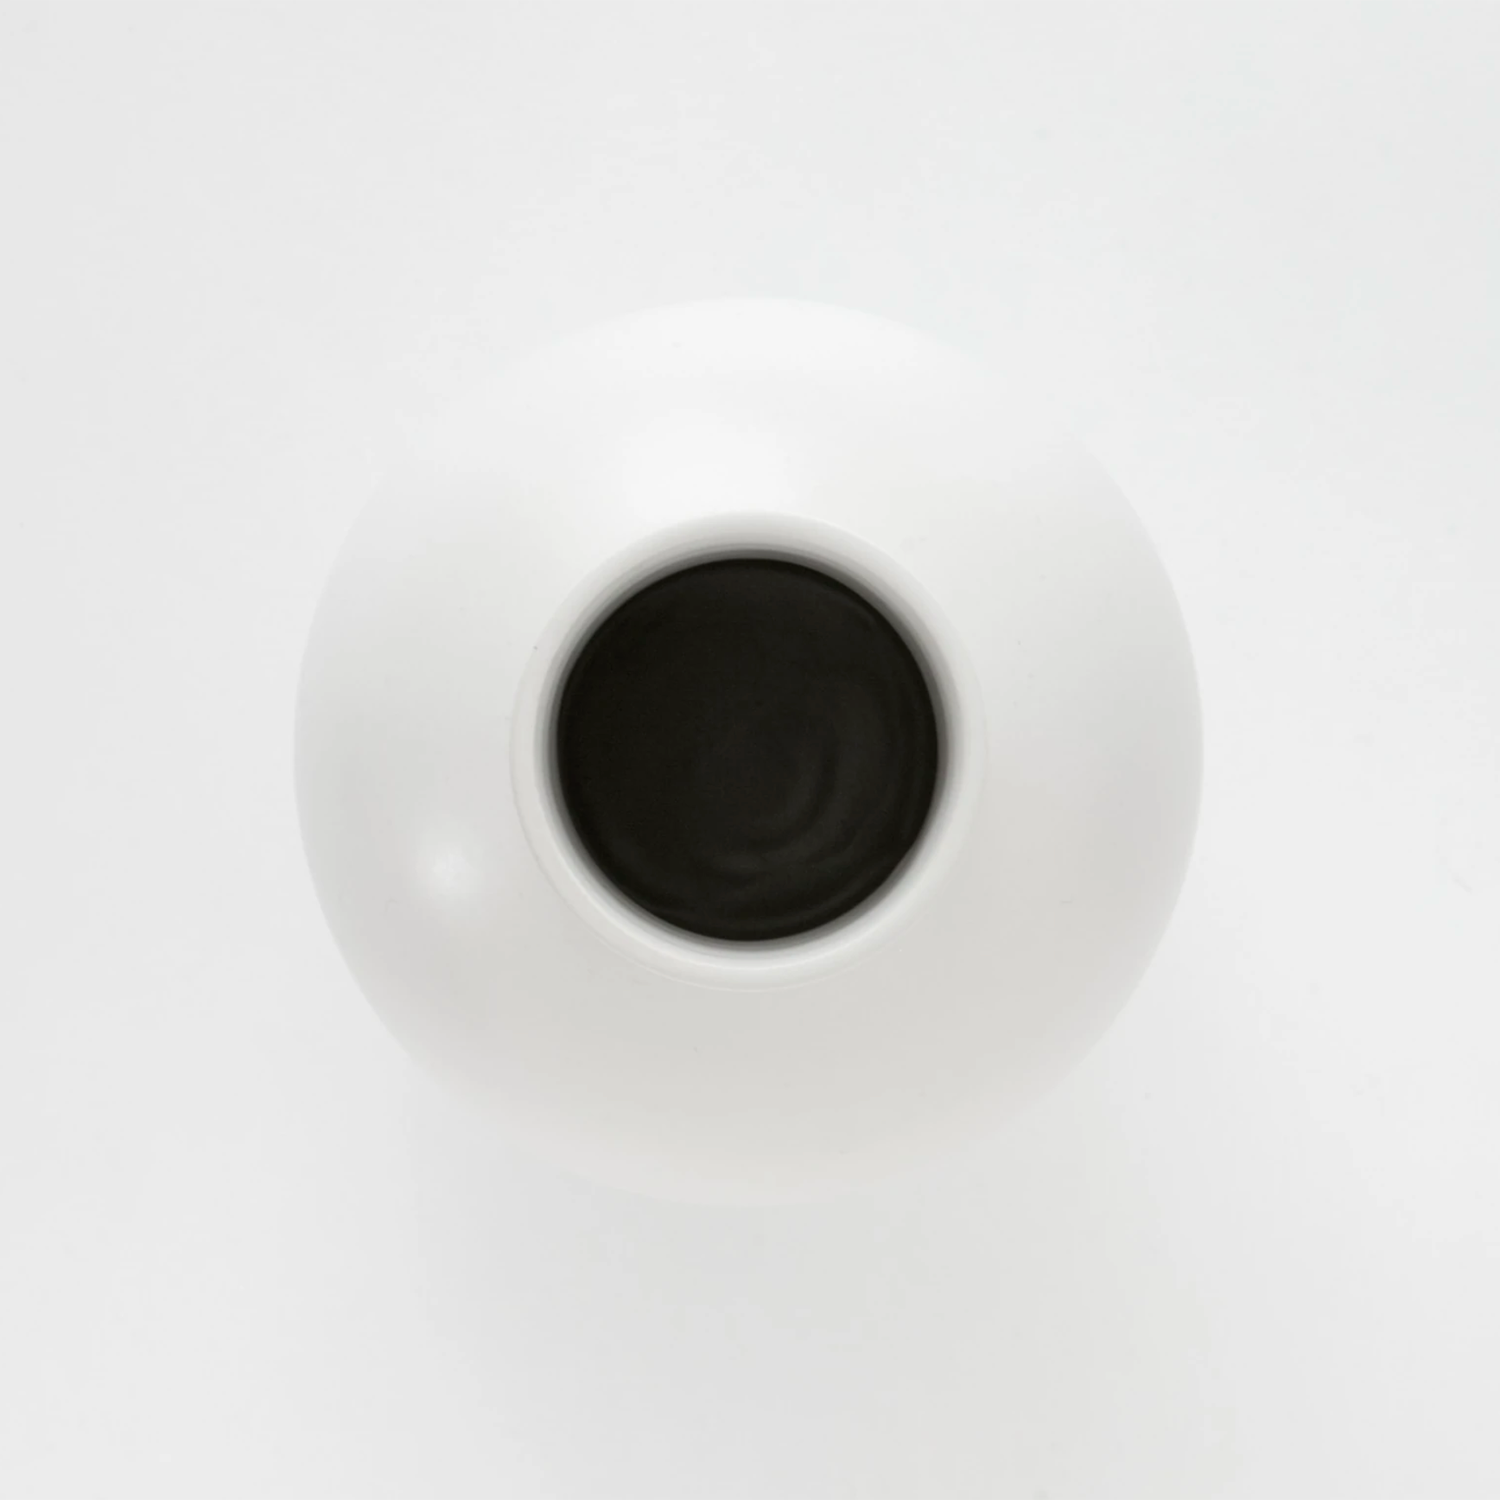 Strøm Vase Large - White